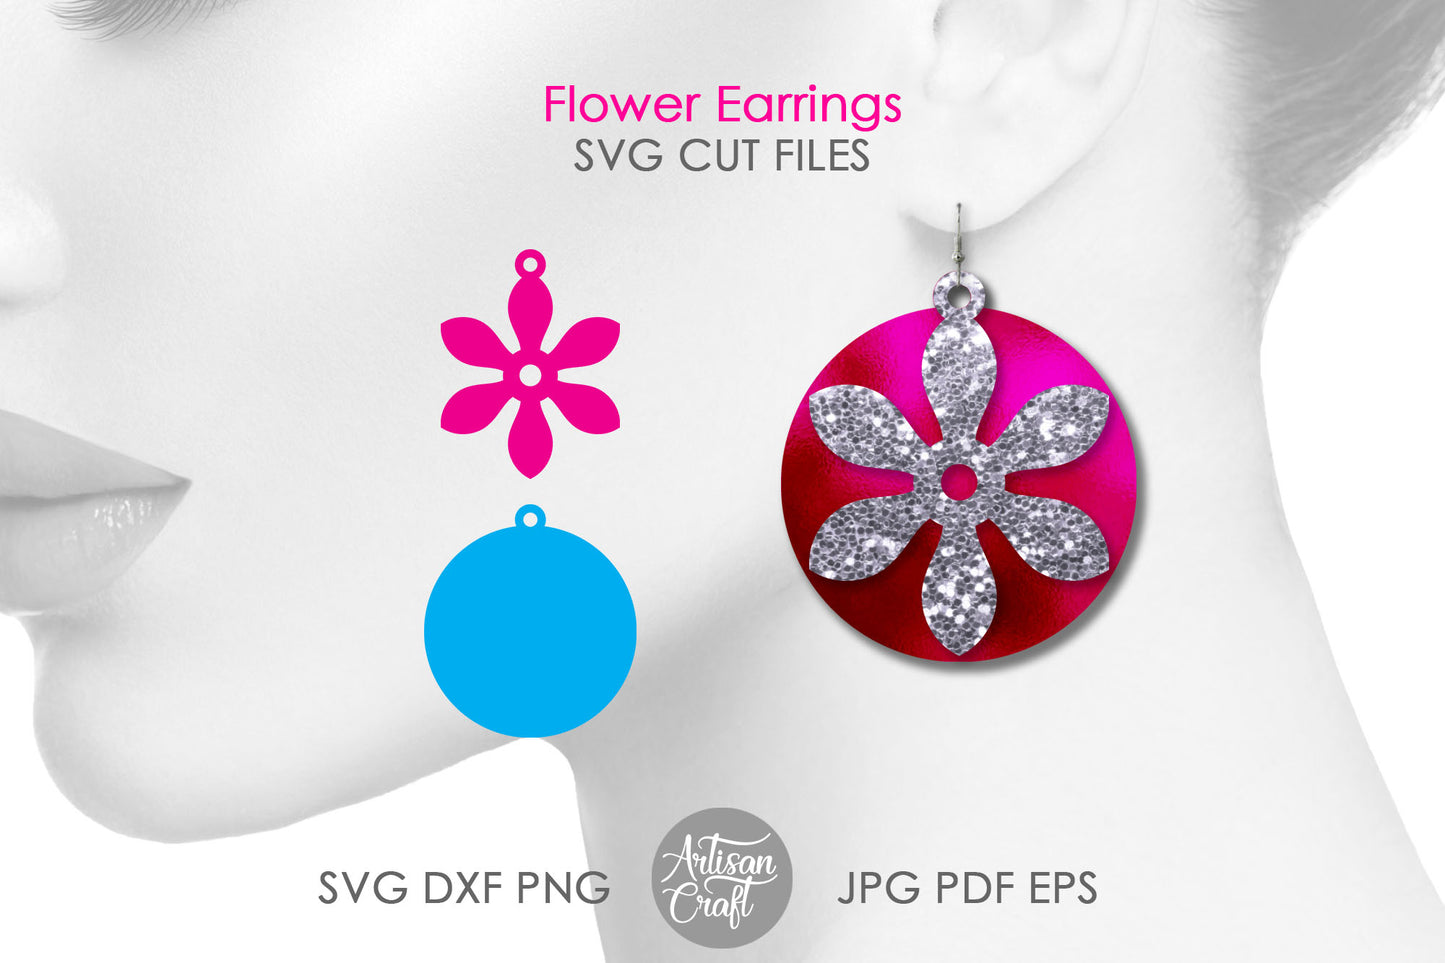 Floral earrings SVG files